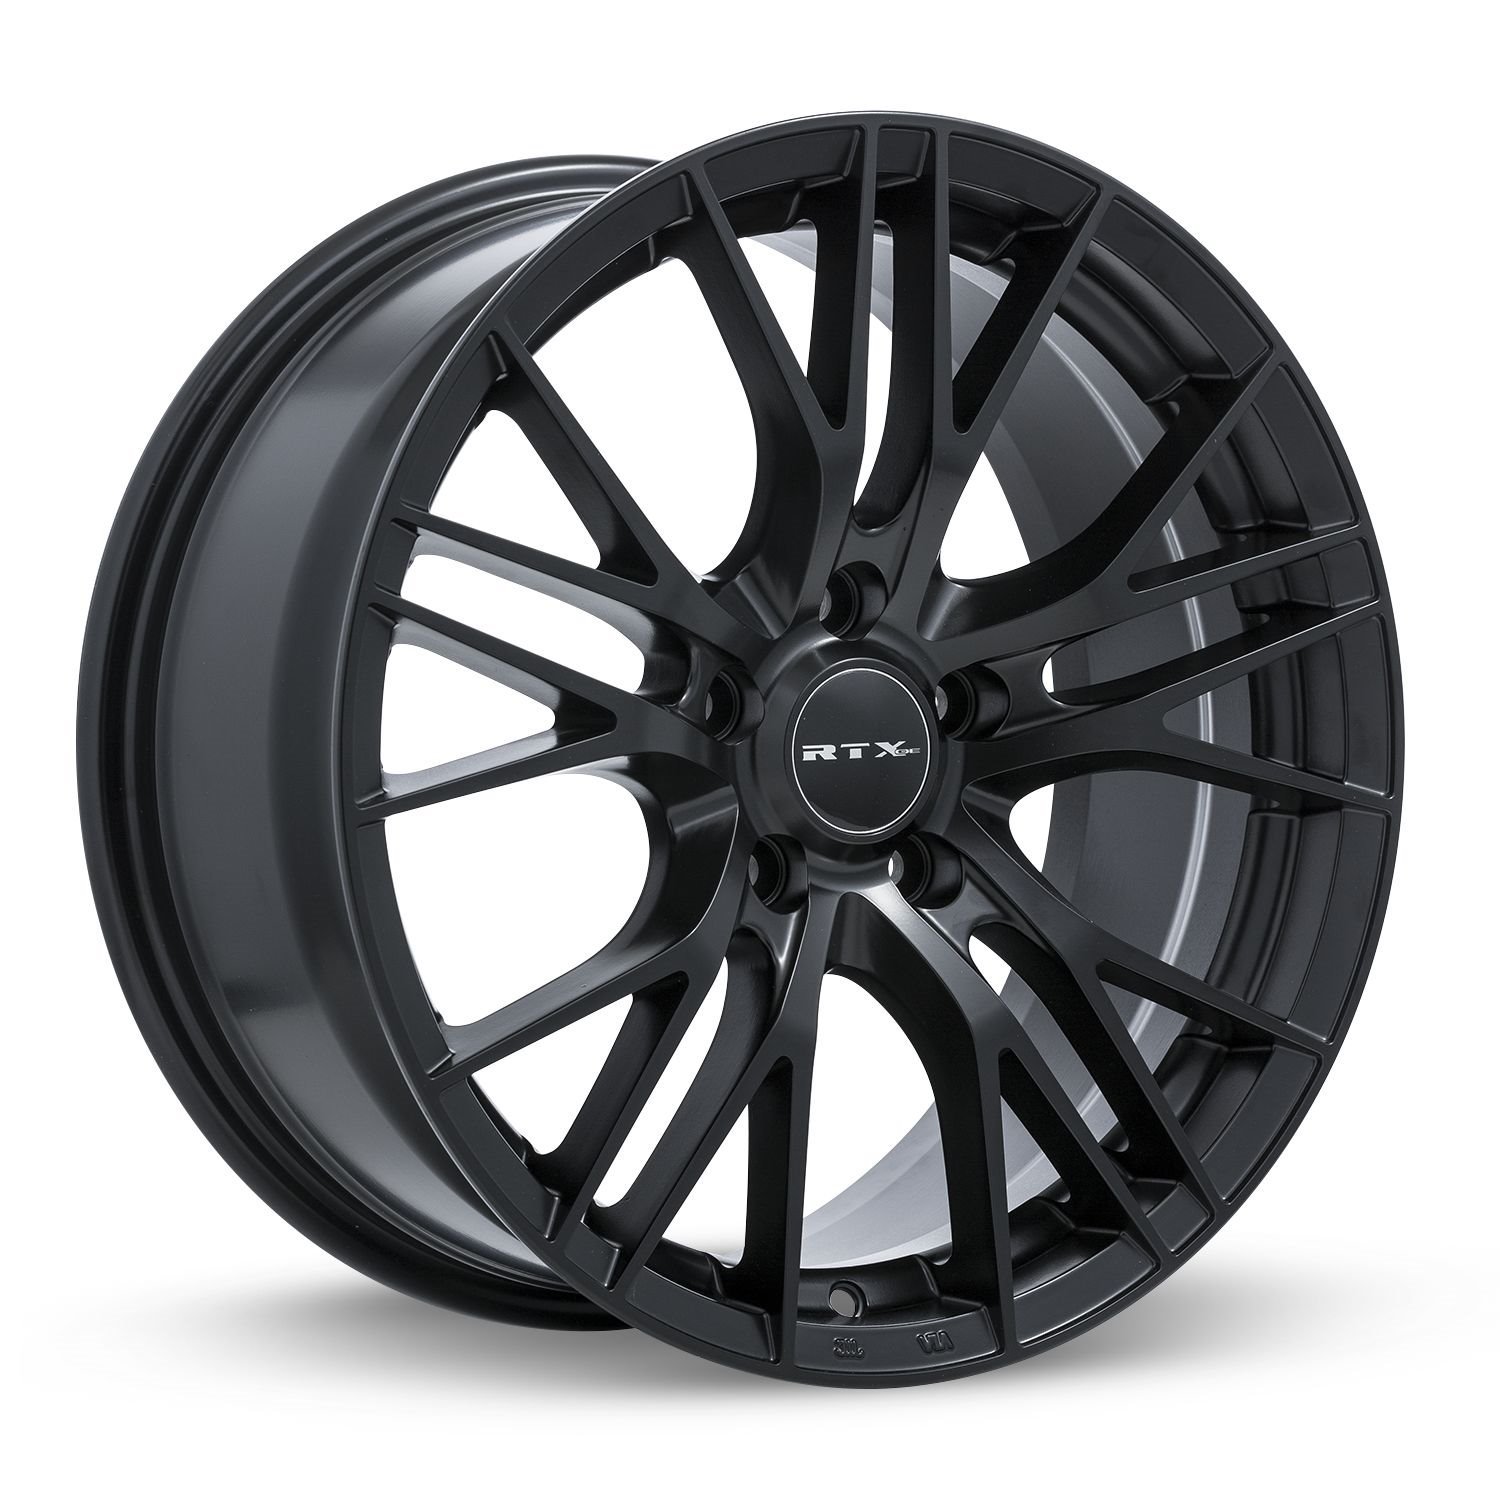 082298 RTX-Series Vertex Wheel [Size: 16" x 7"] Satin Black Finish